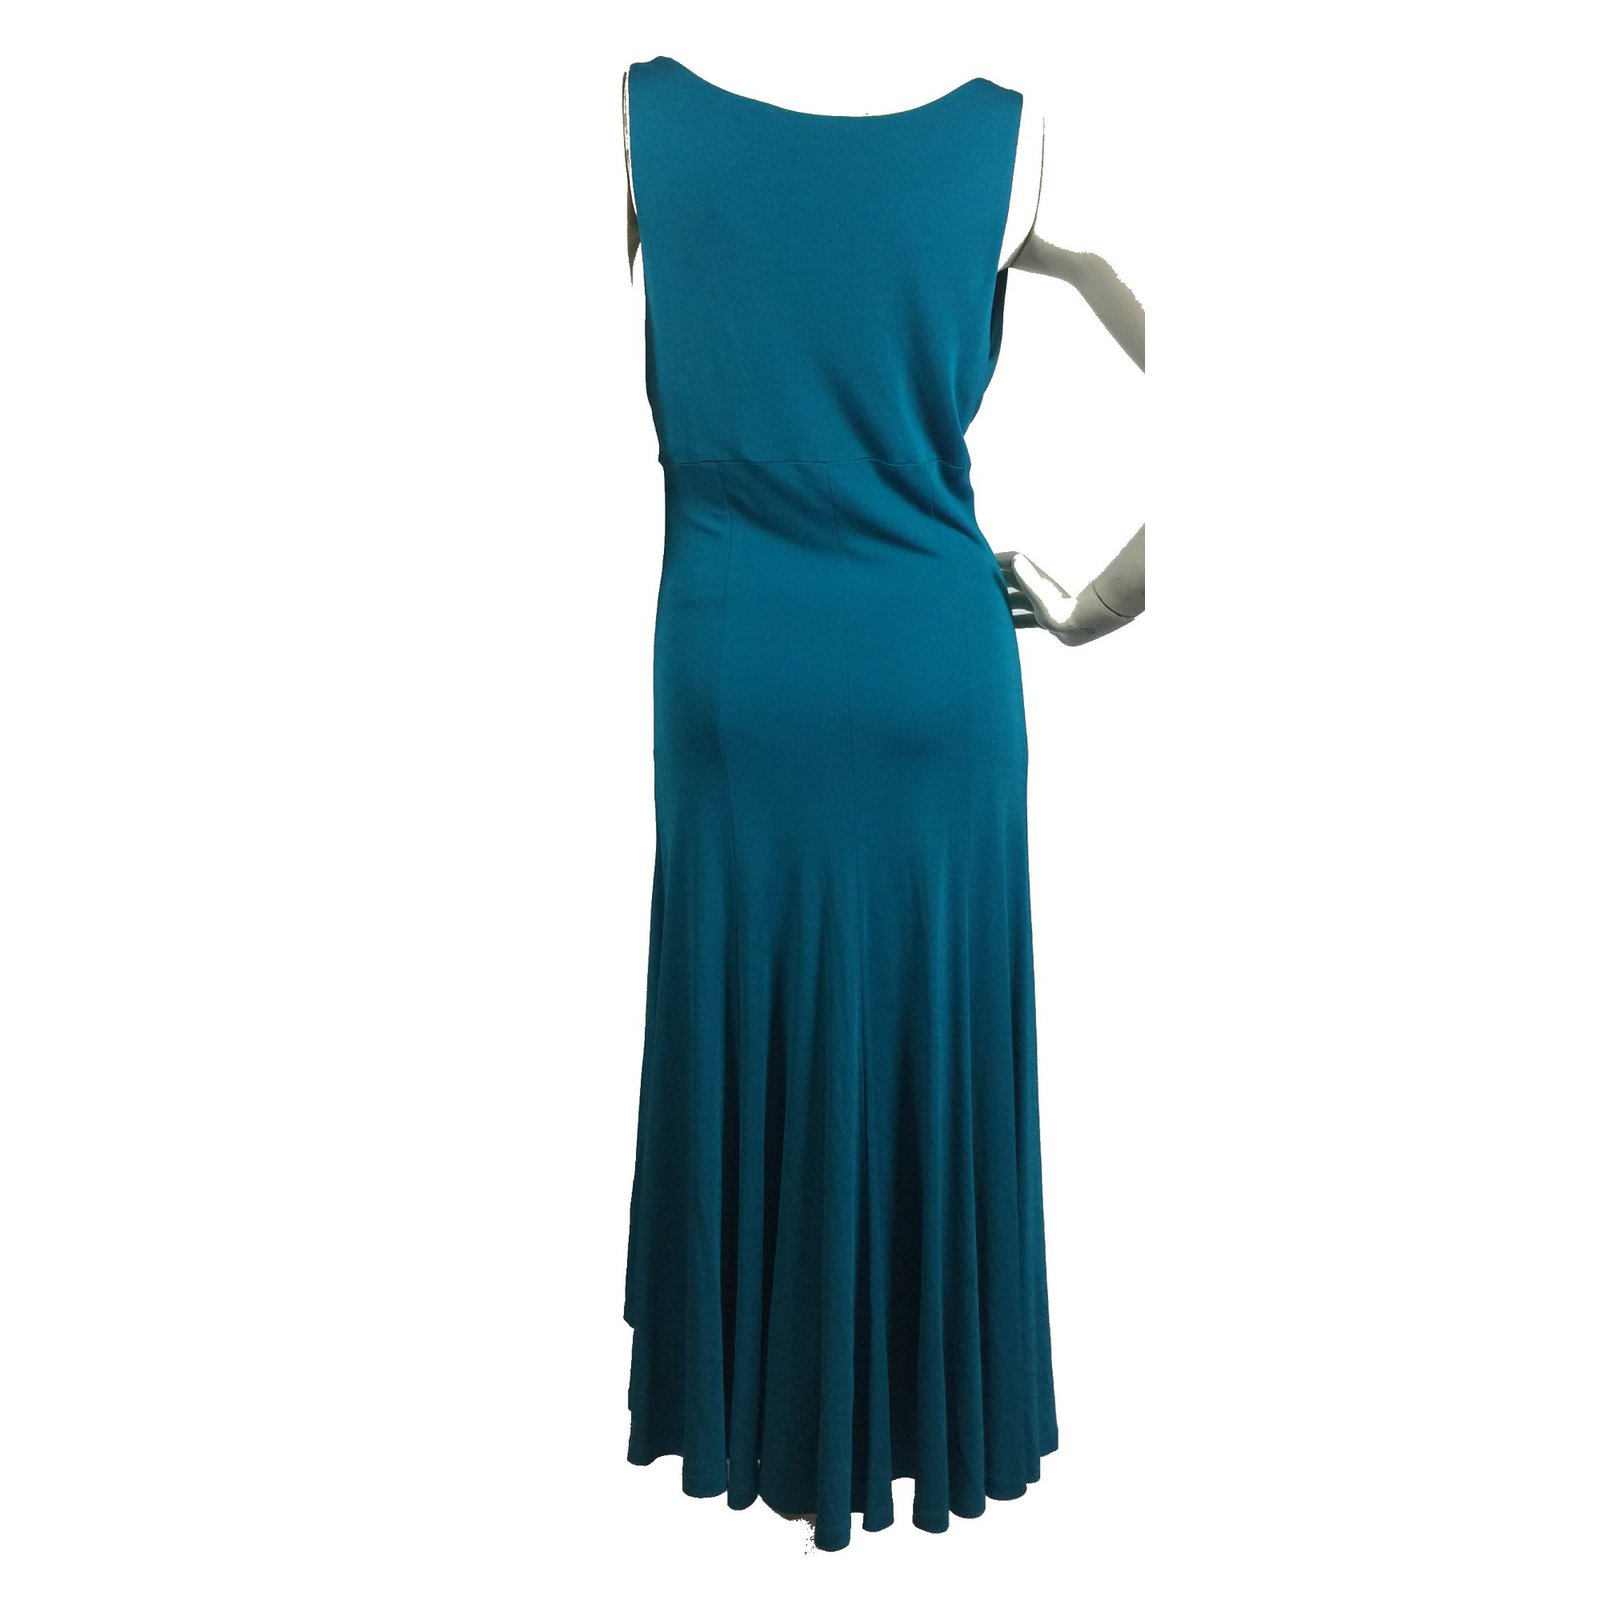 hobbs turquoise dress